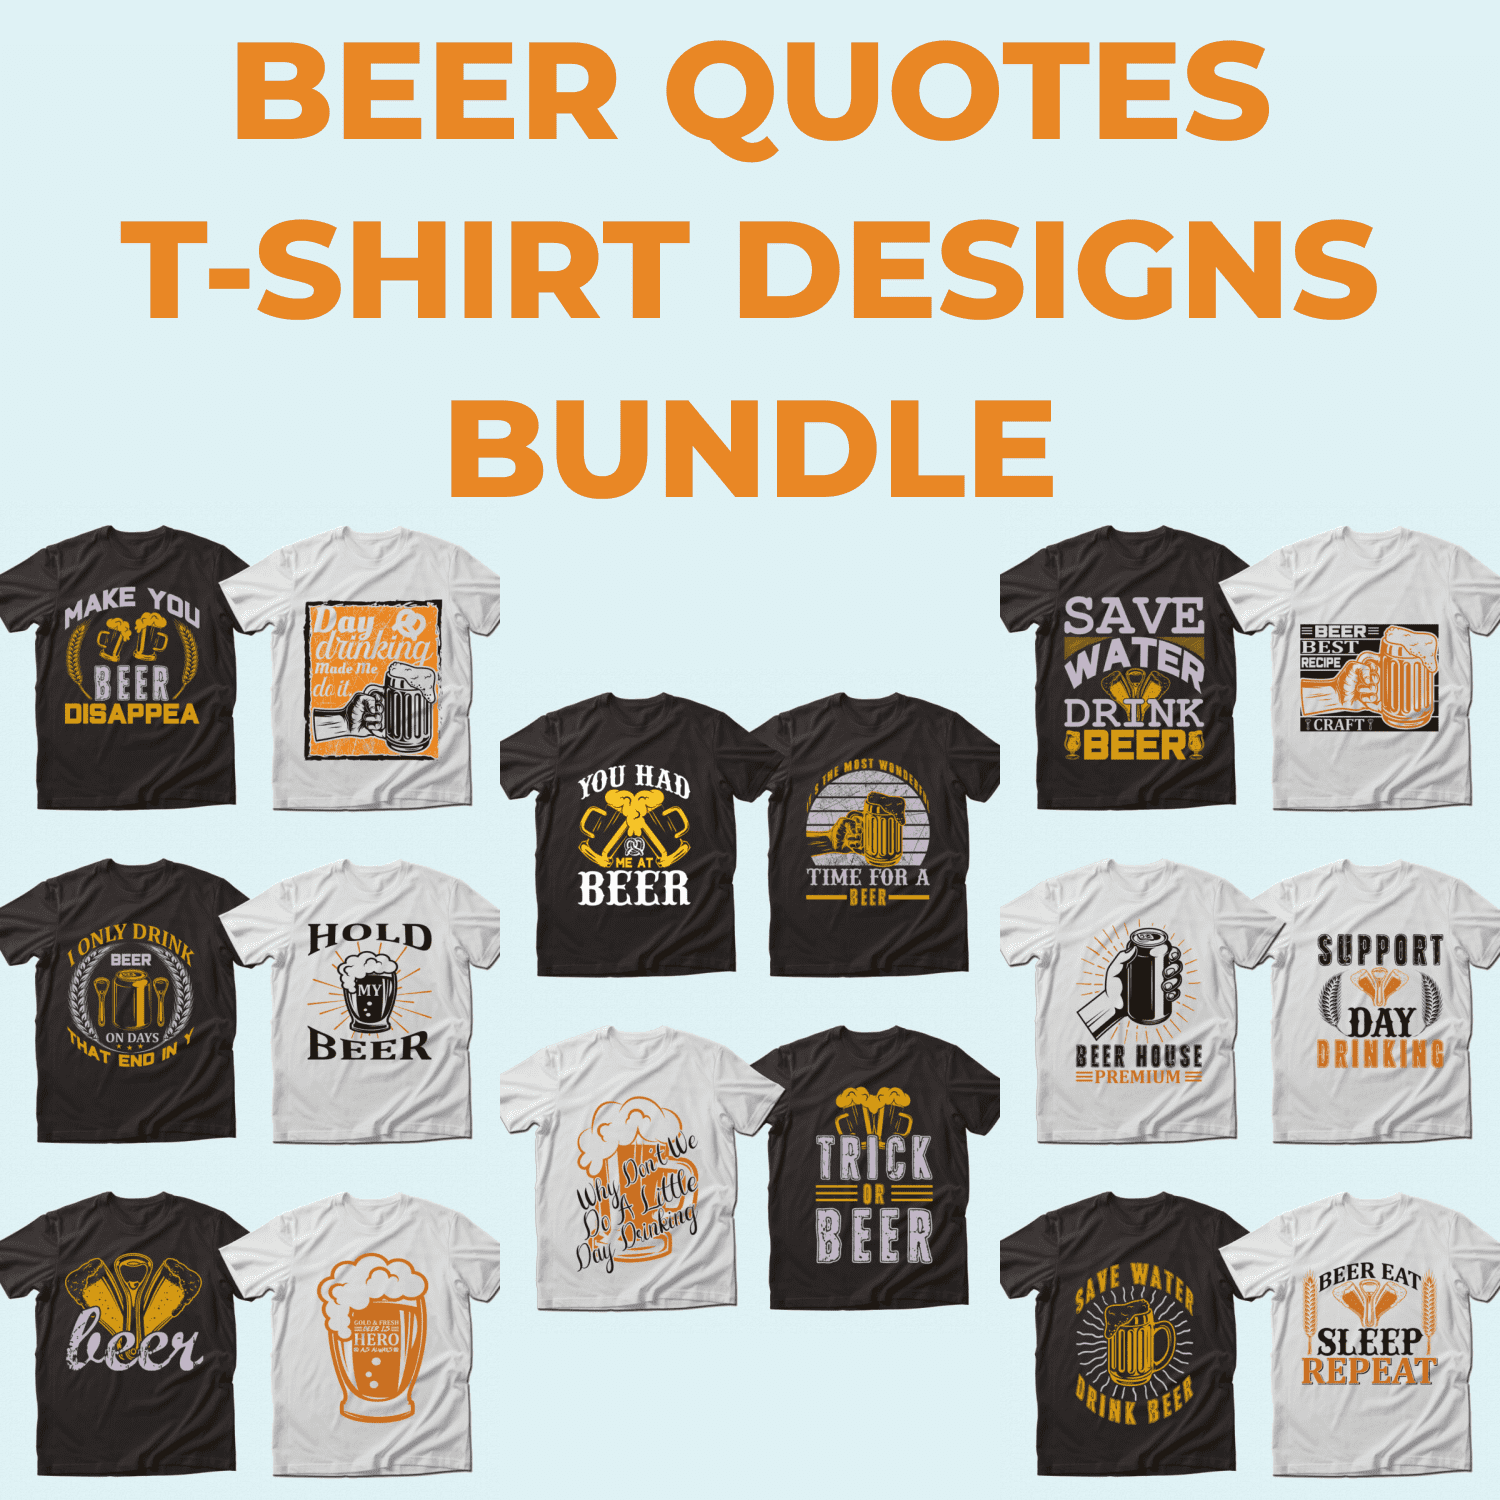 Trendy 20 Beer Quotes T-shirt Designs Bundle.